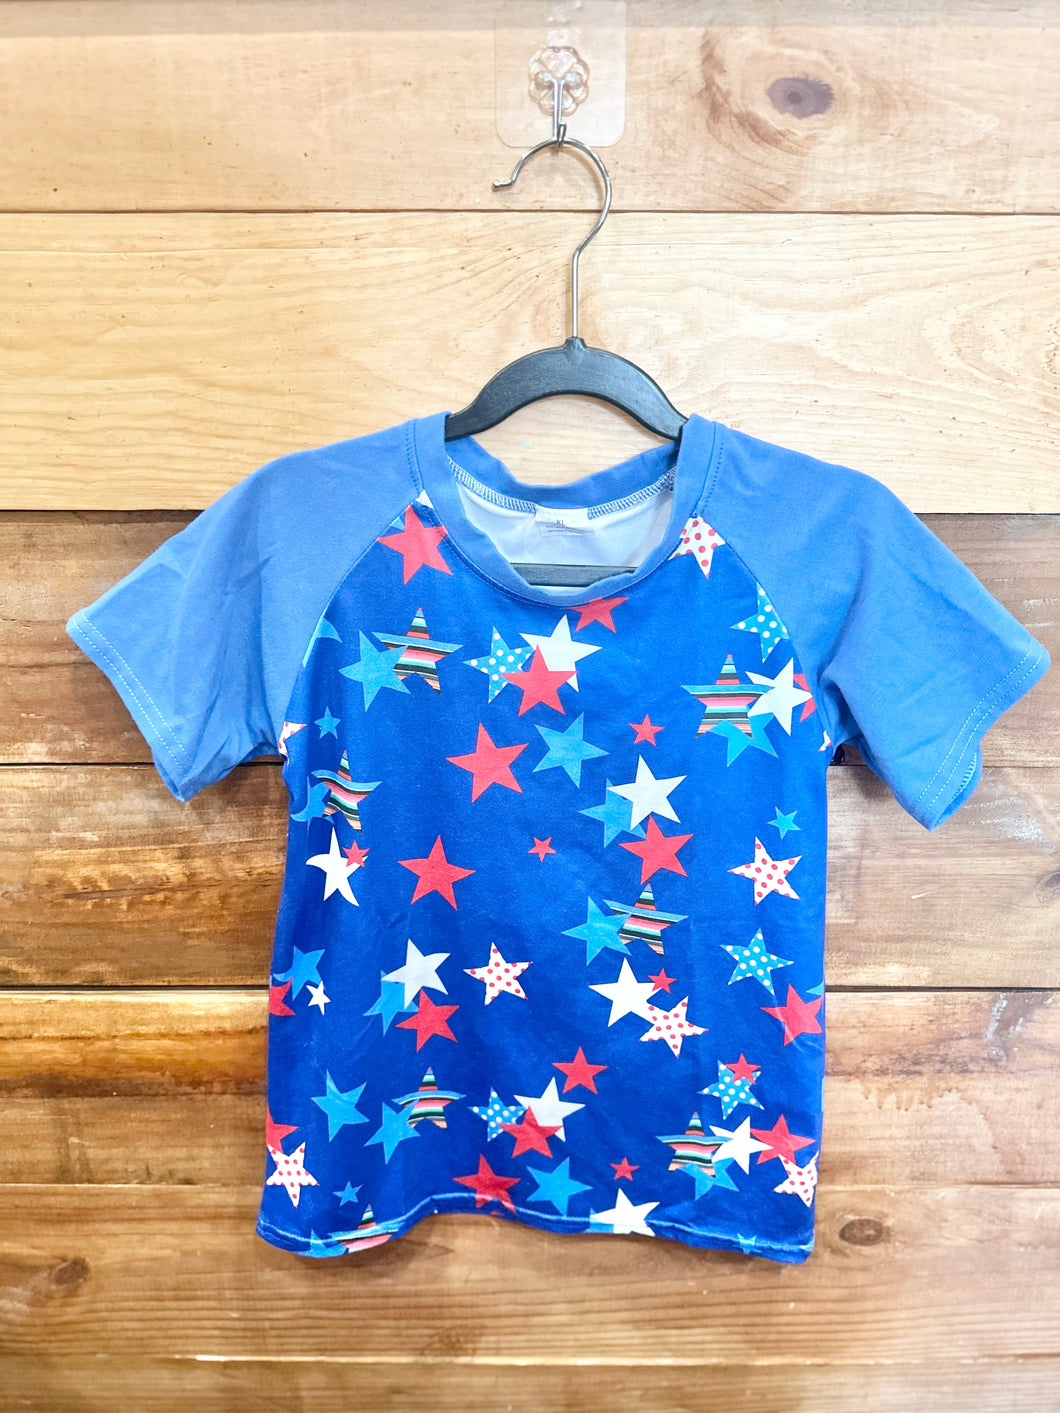 Blue Stars Shirt Size 5-6T